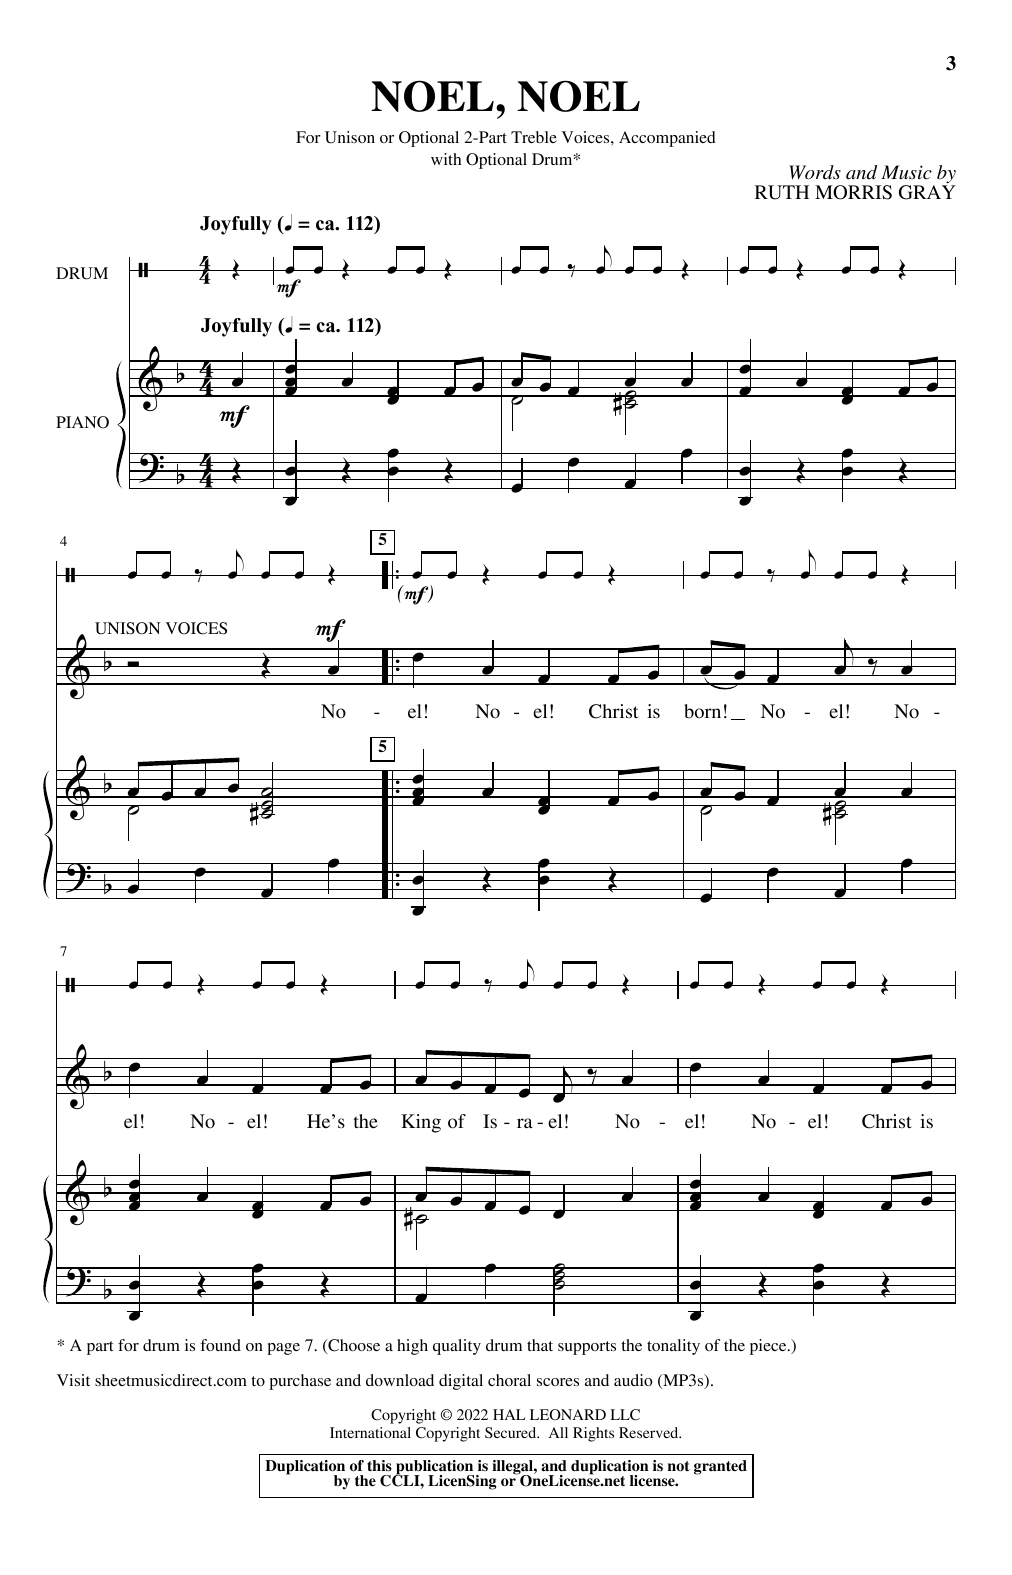 Ruth Morris Gray Noel, Noel Sheet Music Notes & Chords for Unison Choir - Download or Print PDF